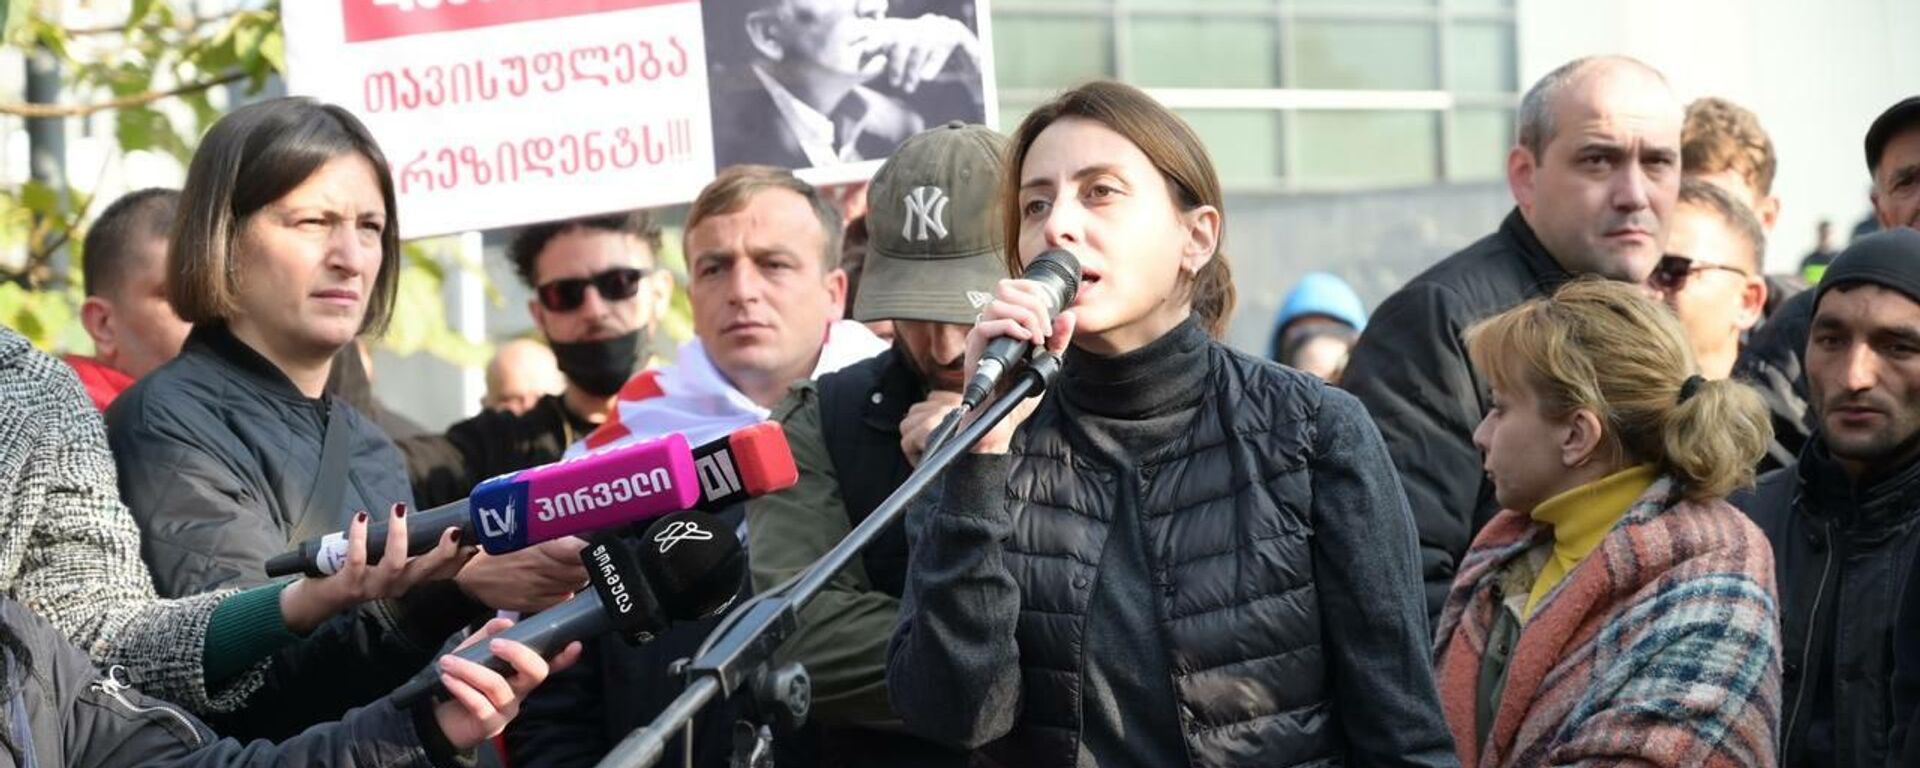 Хатия Деканоидзе. Акция протеста сторонников ЕНД и Саакашвили у здания Министерства юстиции 9 ноября 2021 года - Sputnik Грузия, 1920, 09.11.2021